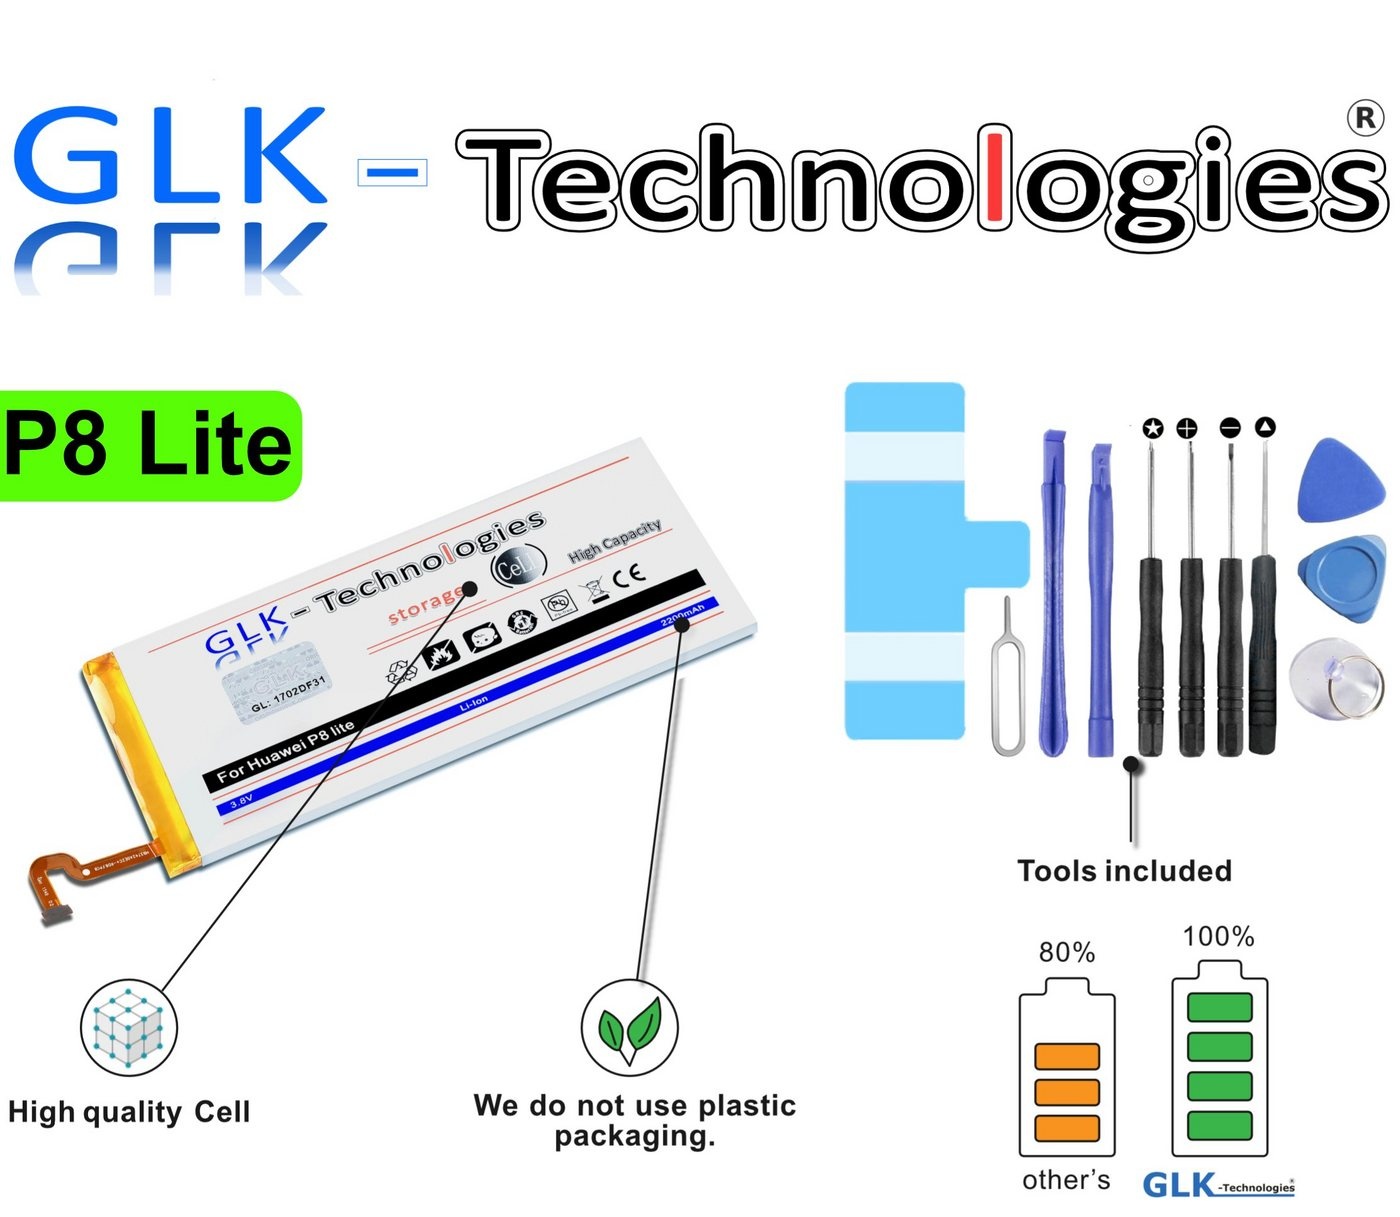 GLK-Technologies High Power Ersatzakku kompatibel mit Huawei P8 Lite HB3742A0EZC, Original GLK-Technologies Battery, accu, 2200 mAh Akku, inkl. Werkzeug Set Kit Smartphone-Akku 2200 mAh (3.8 V)